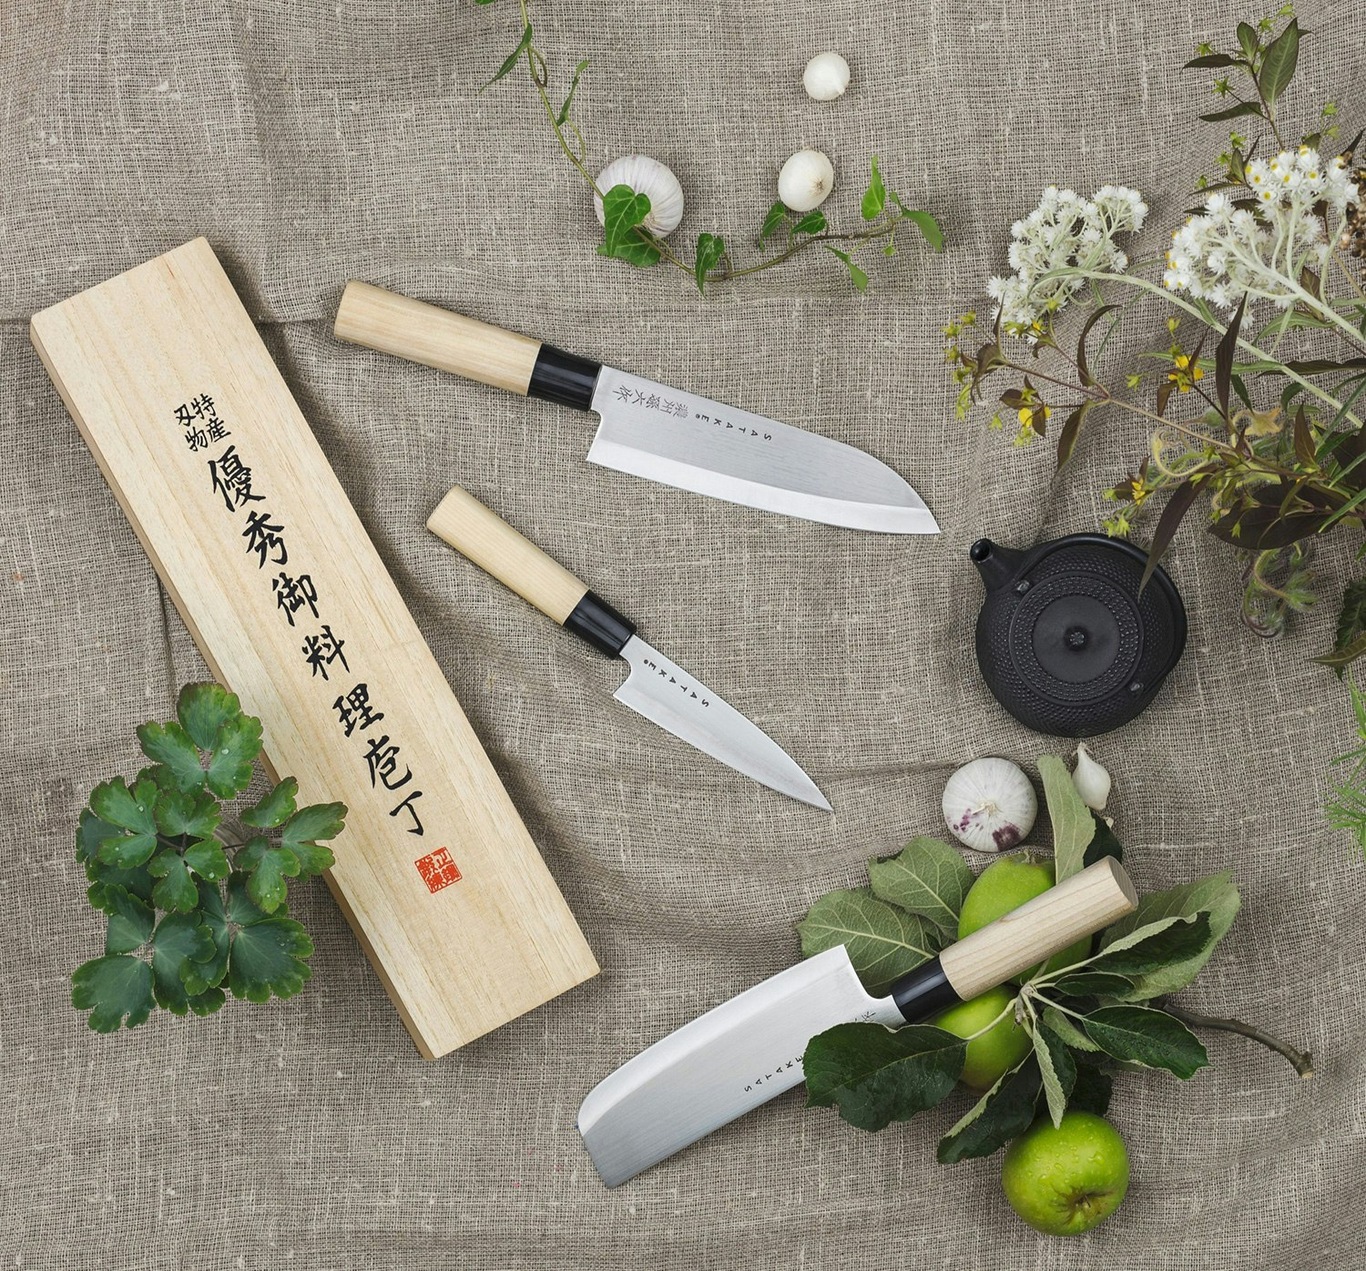 https://royaldesign.com/image/2/satake-houcho-knife-set-3-knives-2?w=800&quality=80